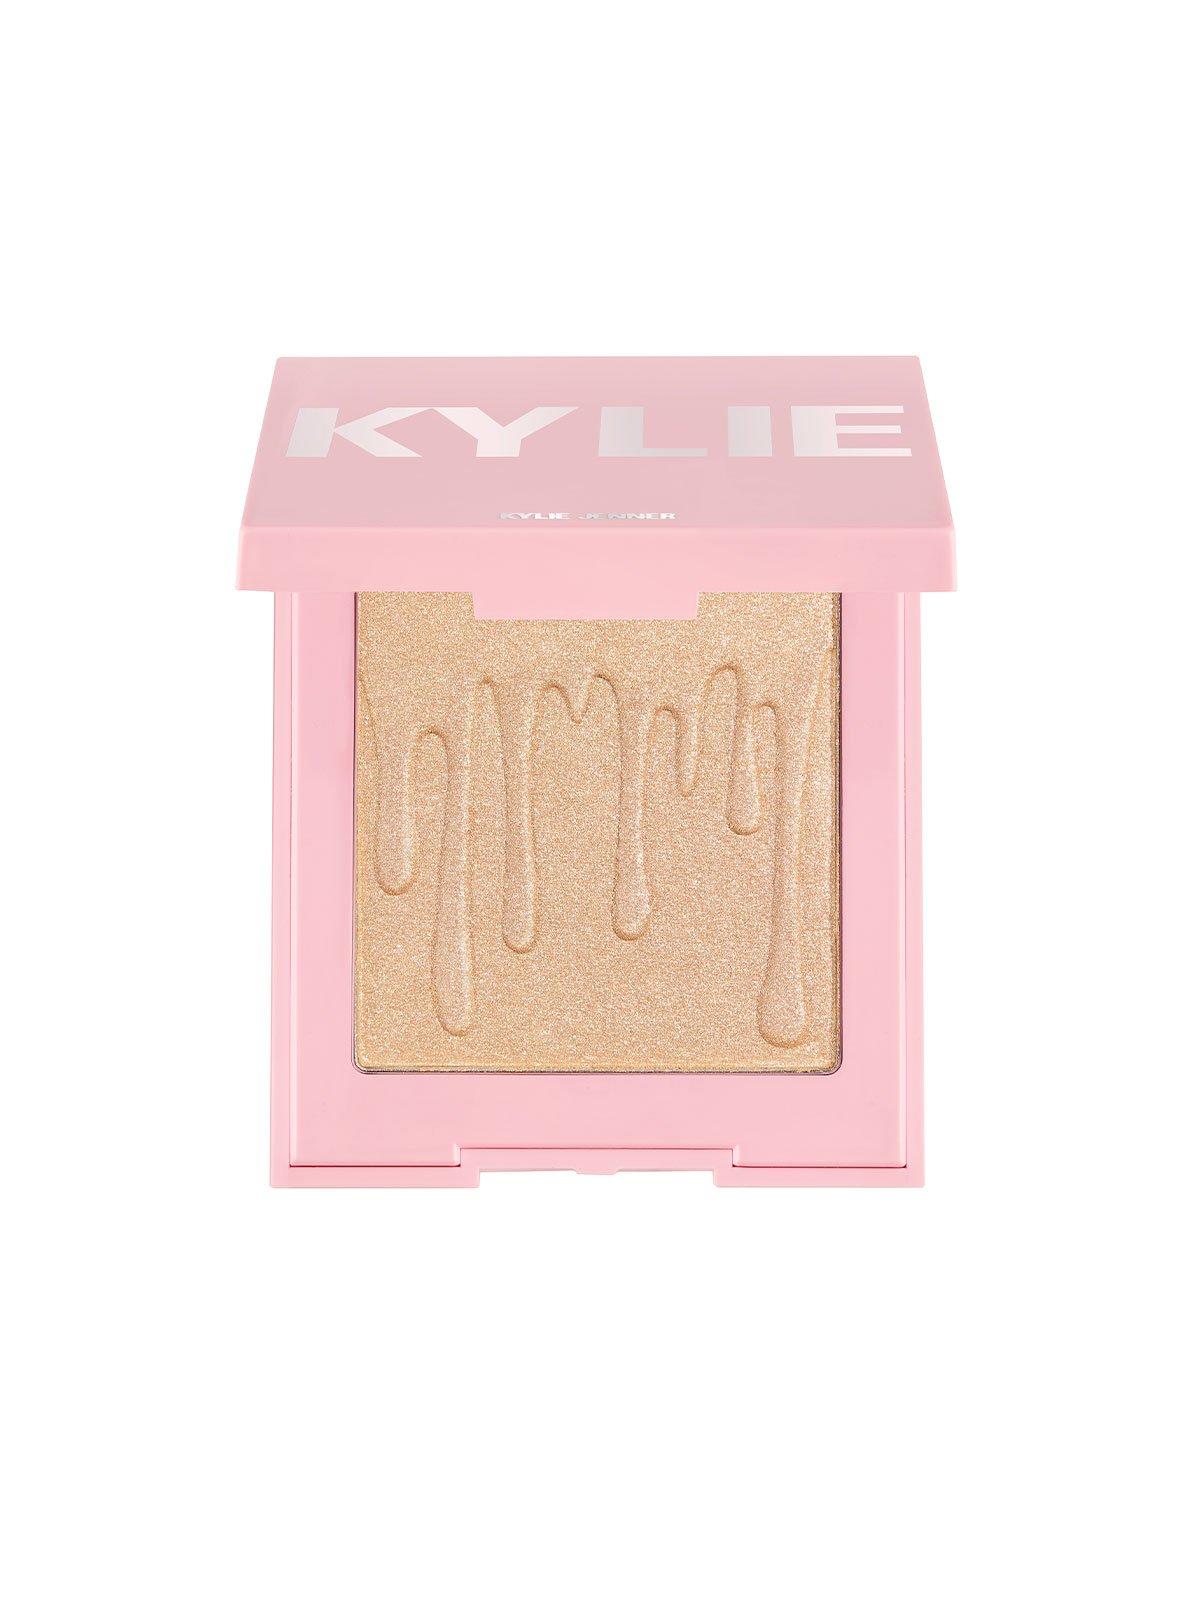 Kylie Pressed Illuminating Powder Sunday Brunch